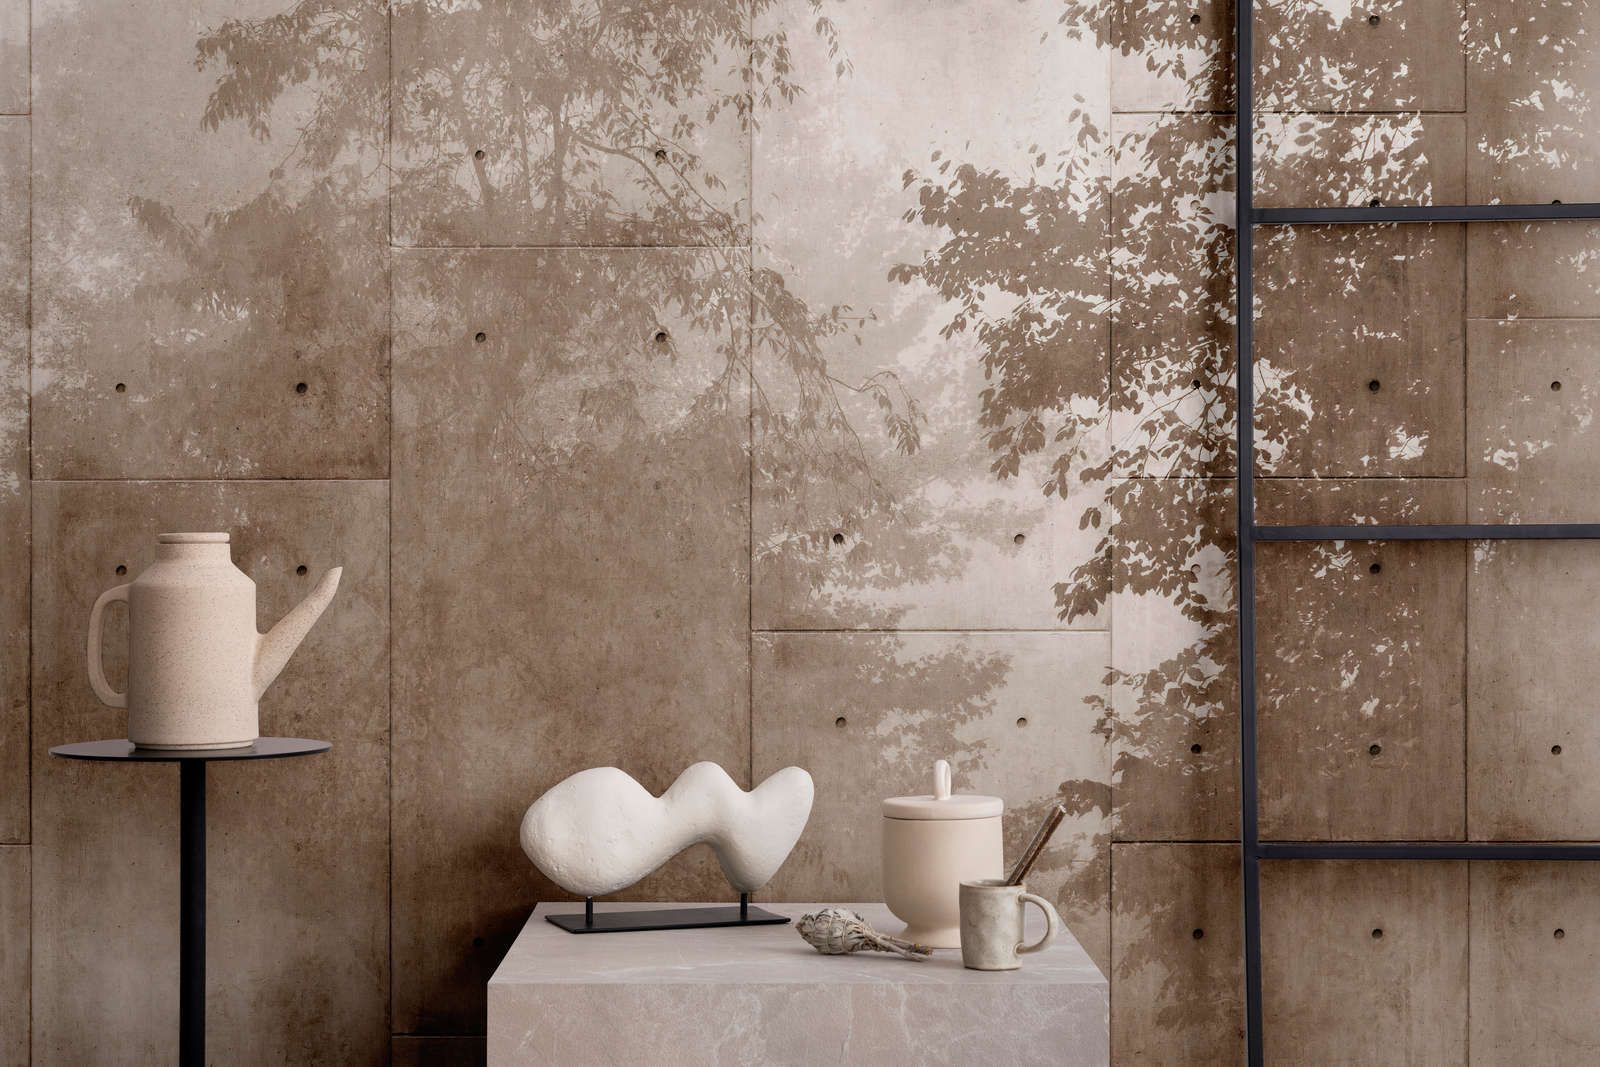             Photo wallpaper »mytho« - Treetops on concrete slabs - Smooth, slightly shiny premium non-woven fabric
        